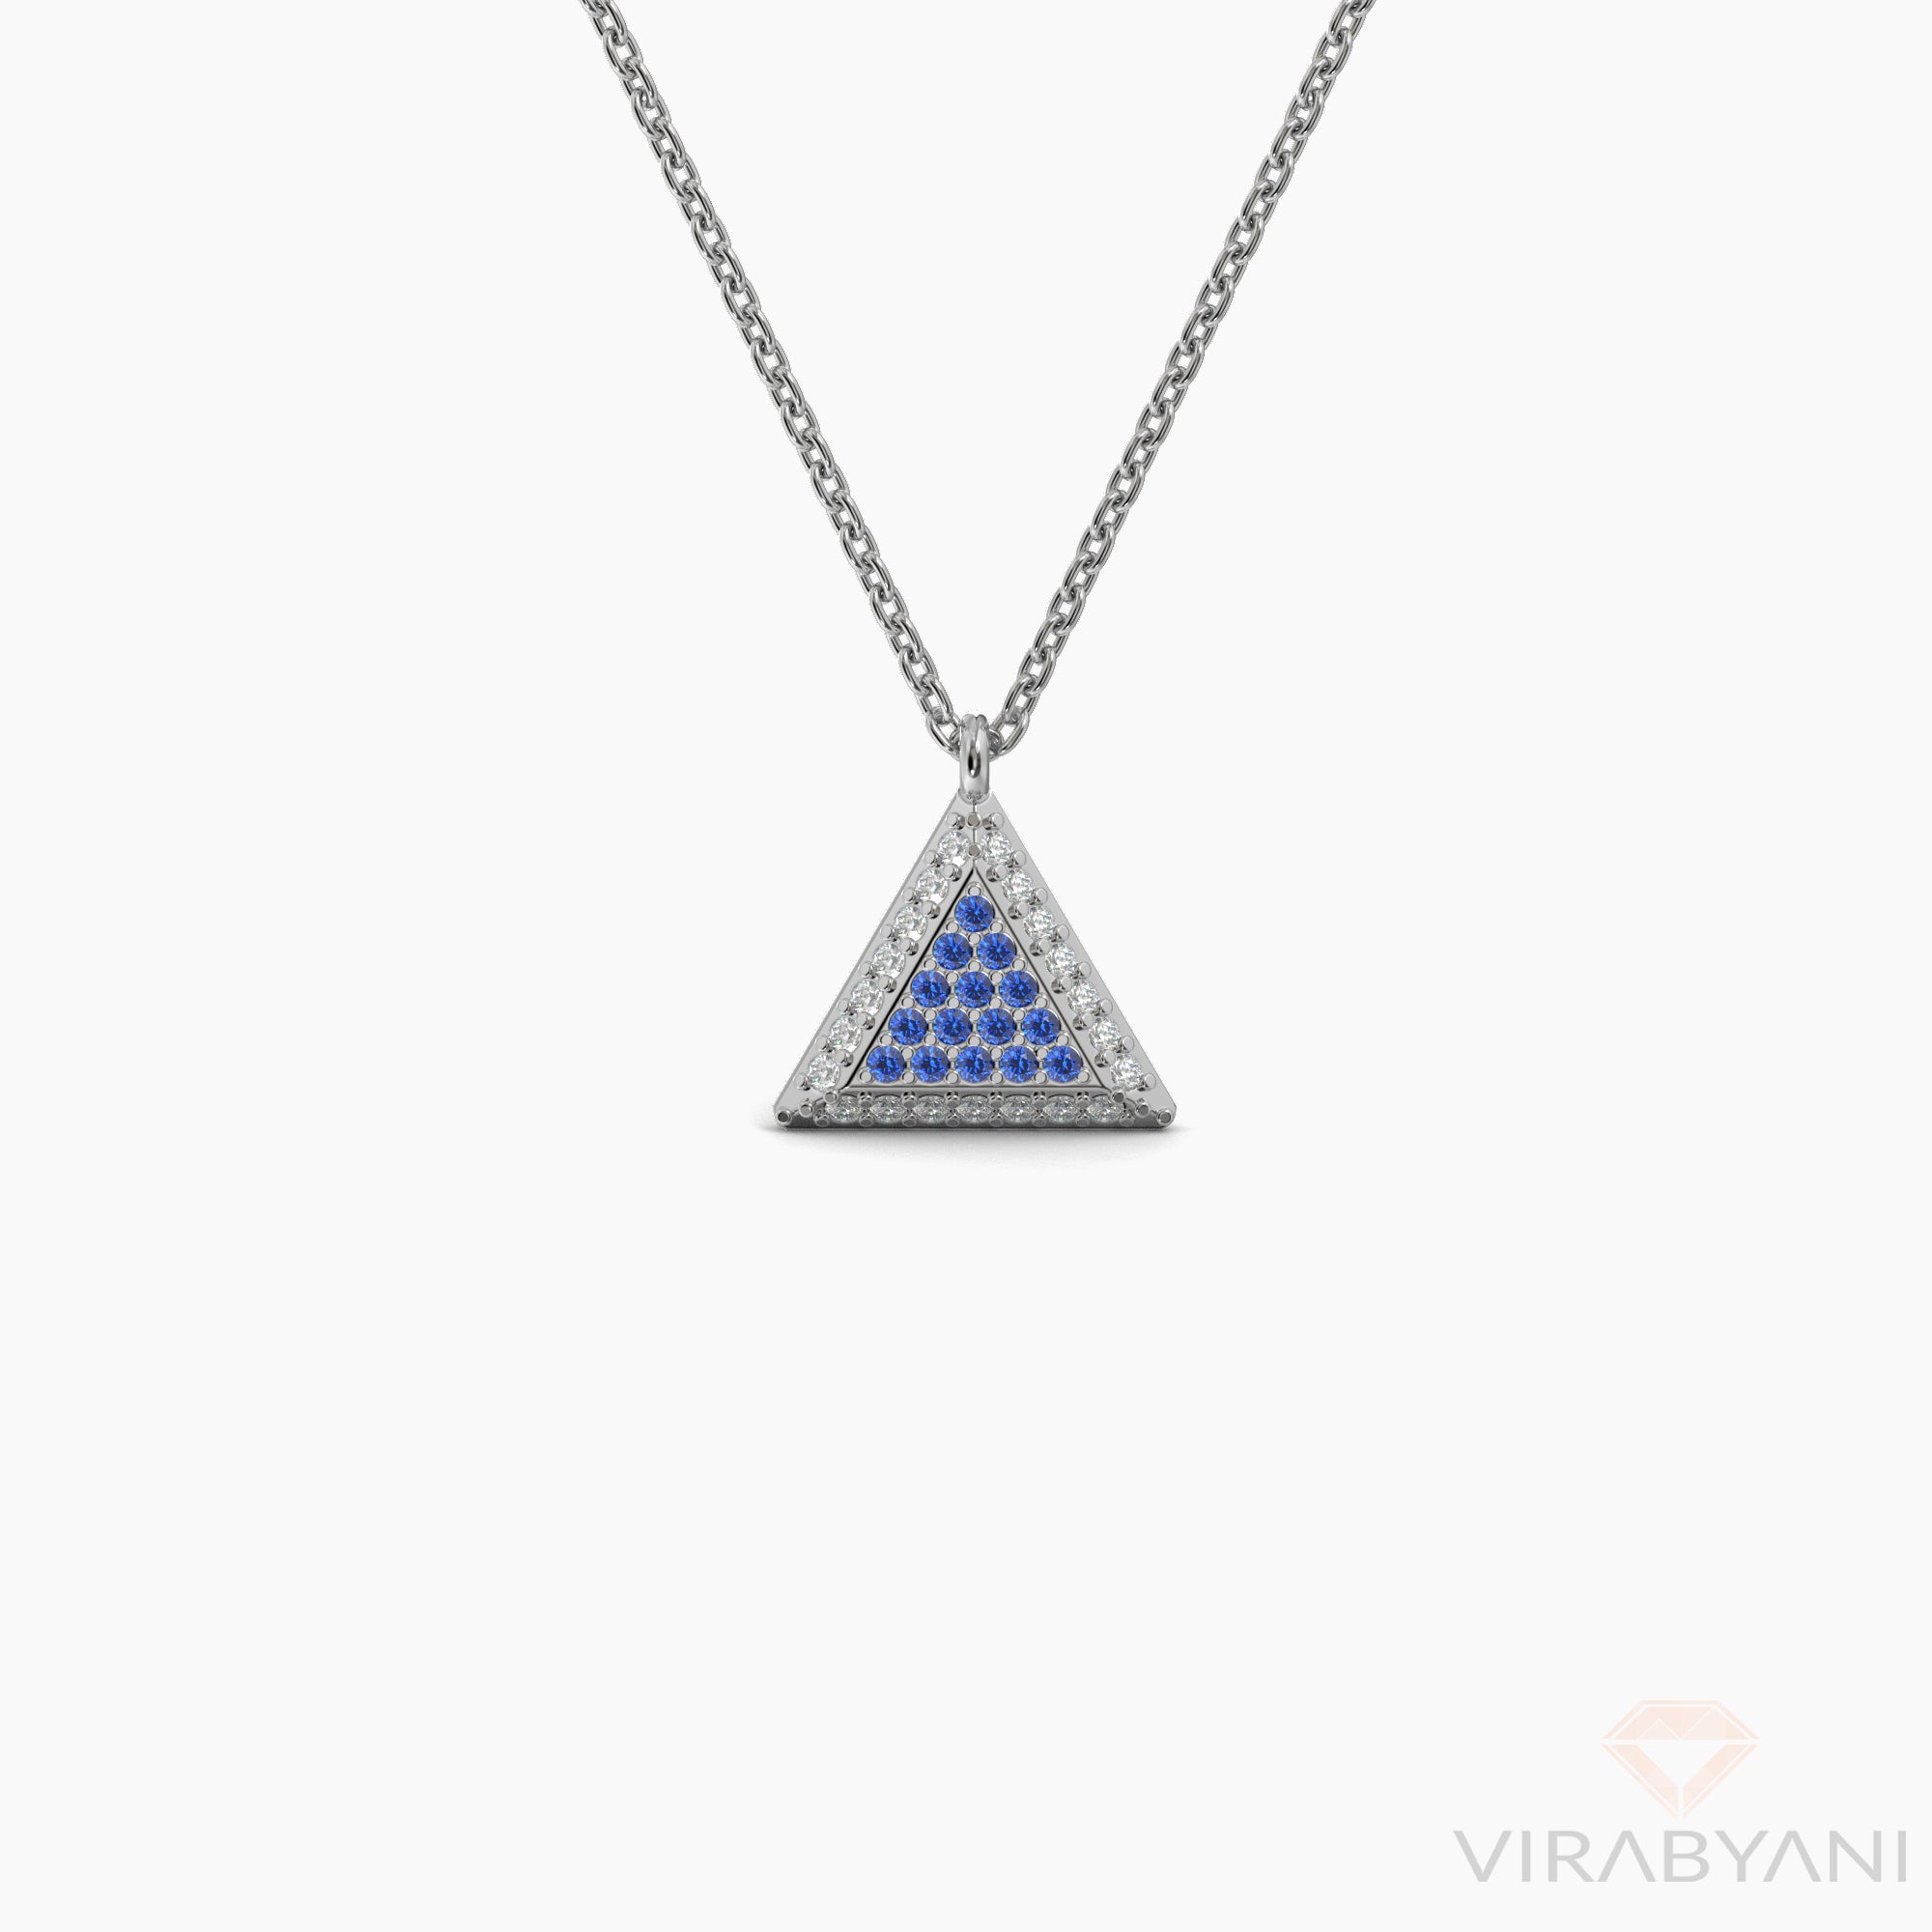 Double Sided Diamond & Sapphire Triangle Shaped AMoré Pavé Necklace